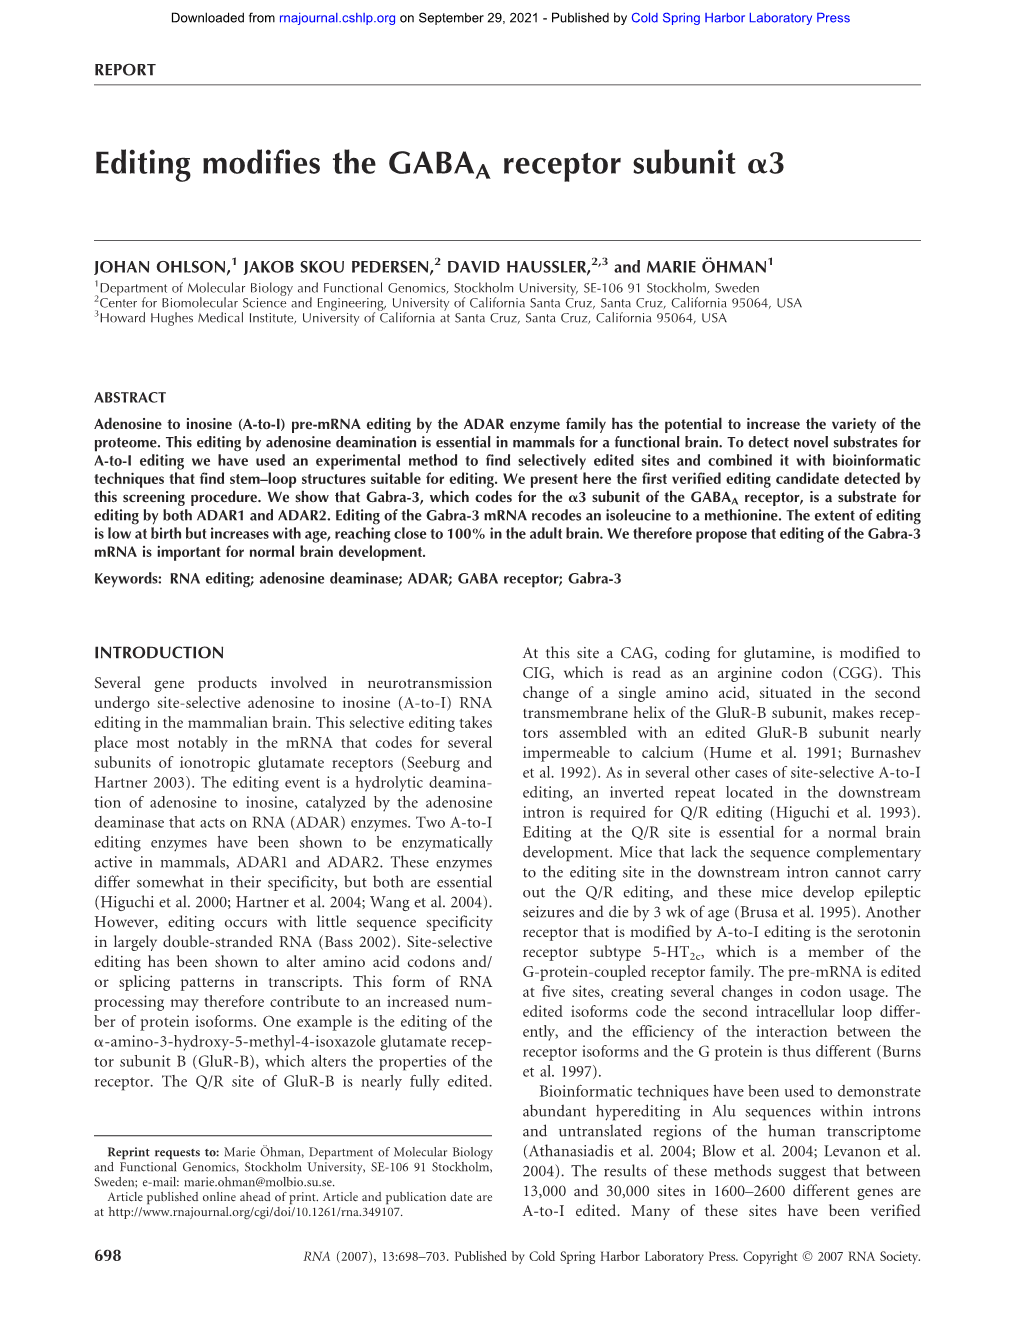 Editing Modifies the GABAA Receptor Subunit A3